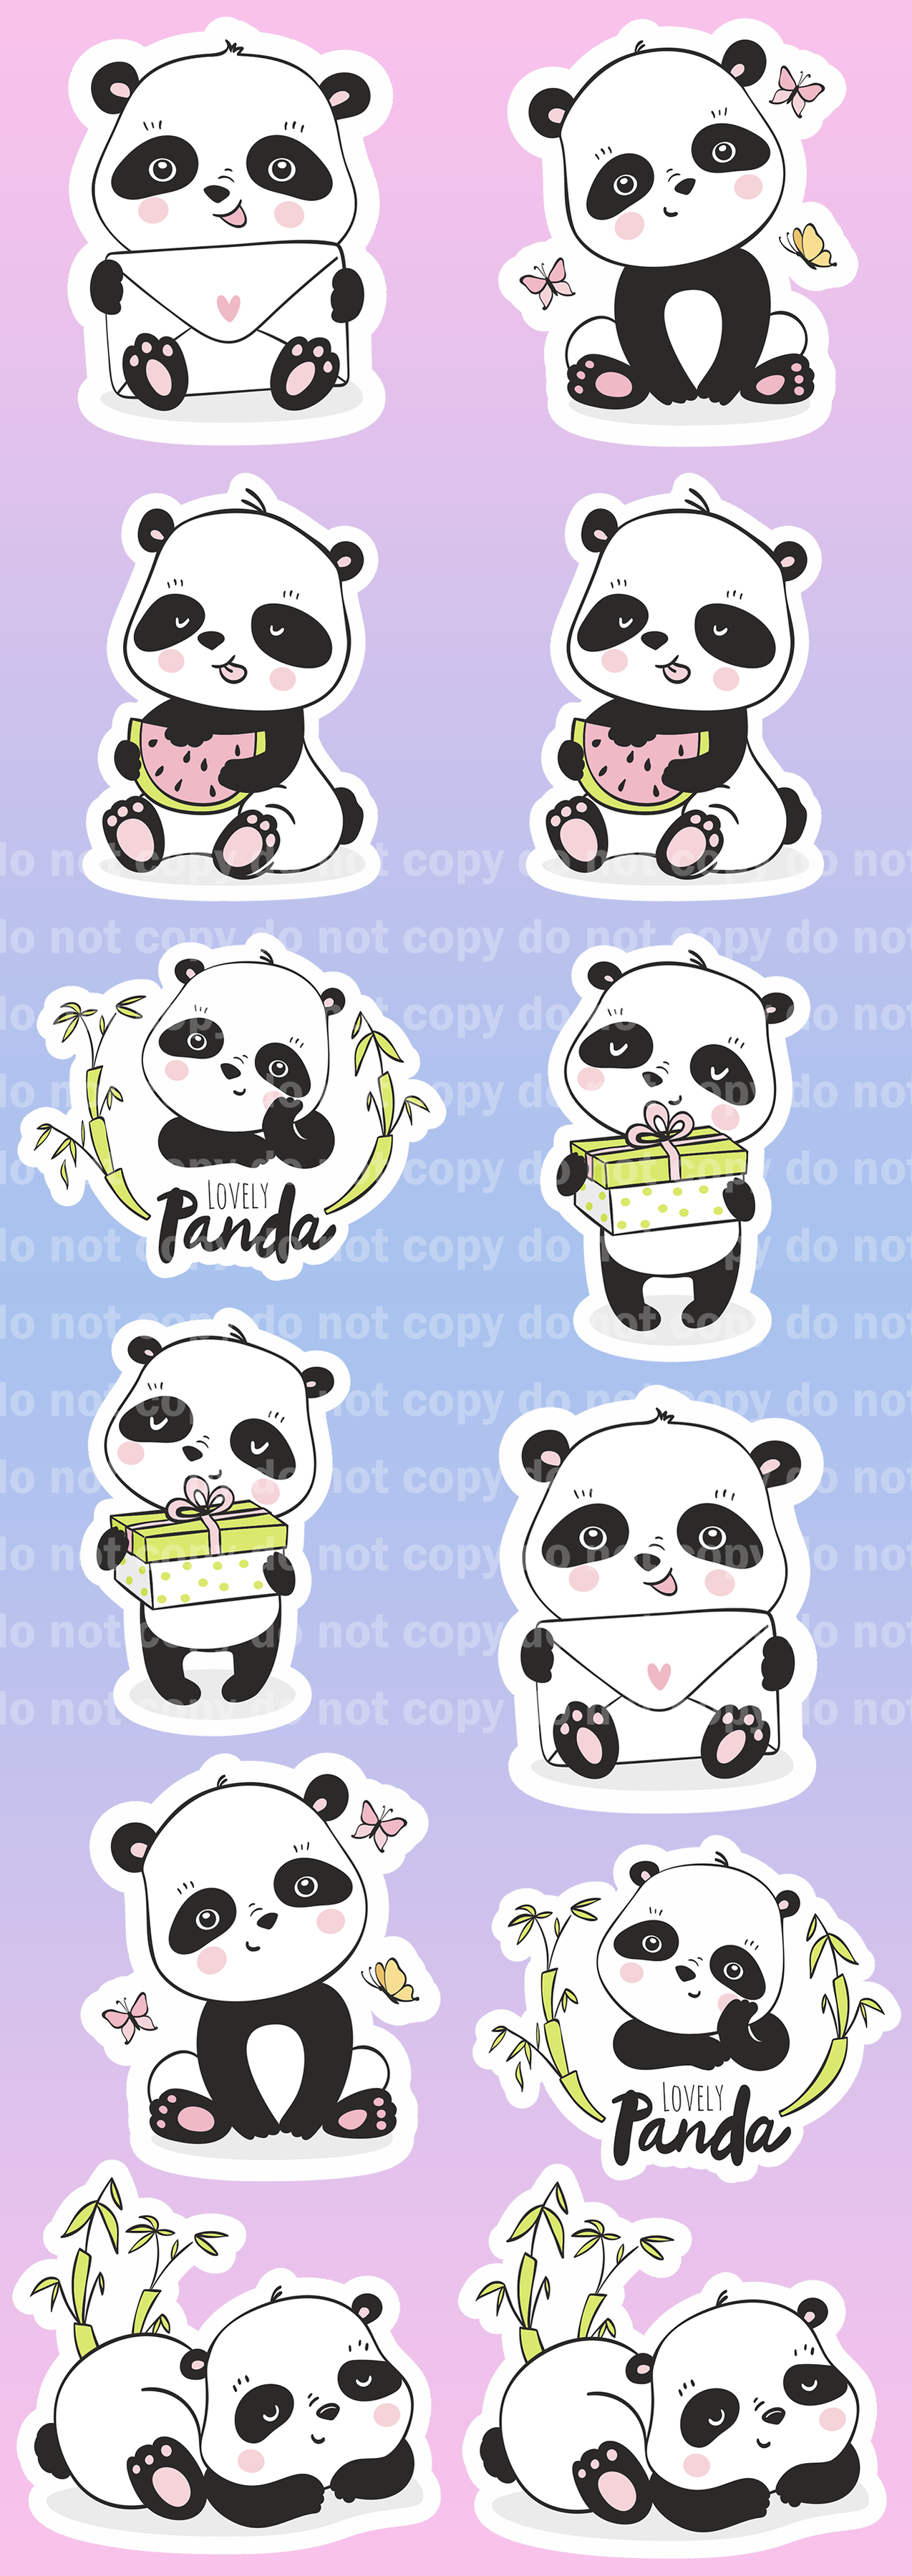 Cute Lovely Panda Stickers - 12 Glossy Stickers per sheet